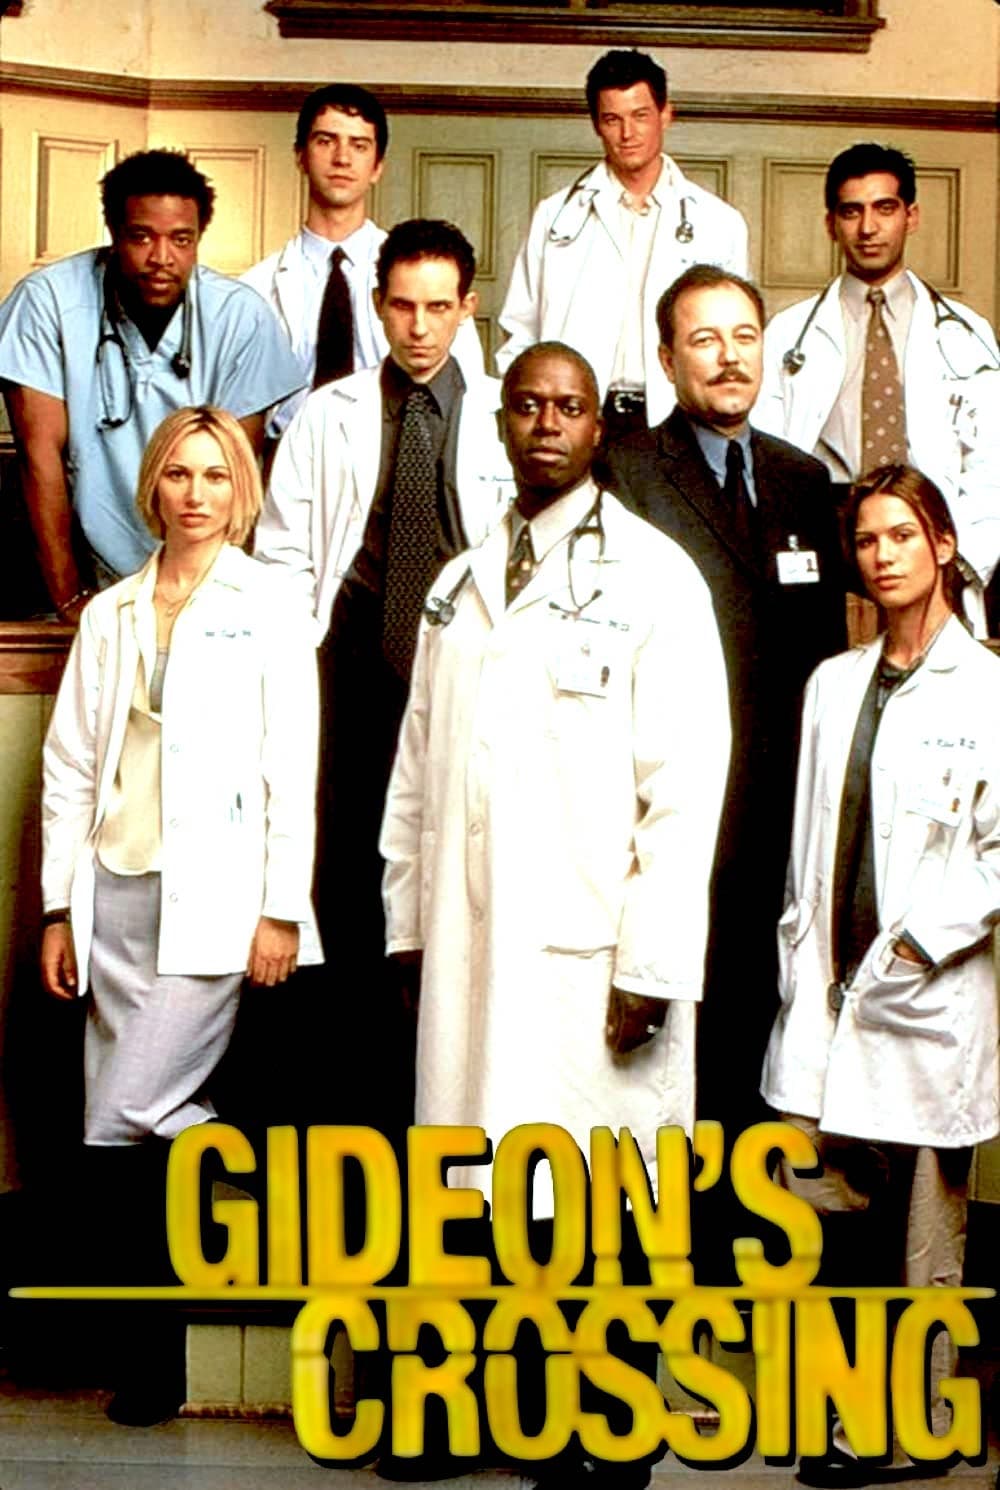 Gideon's Crossing